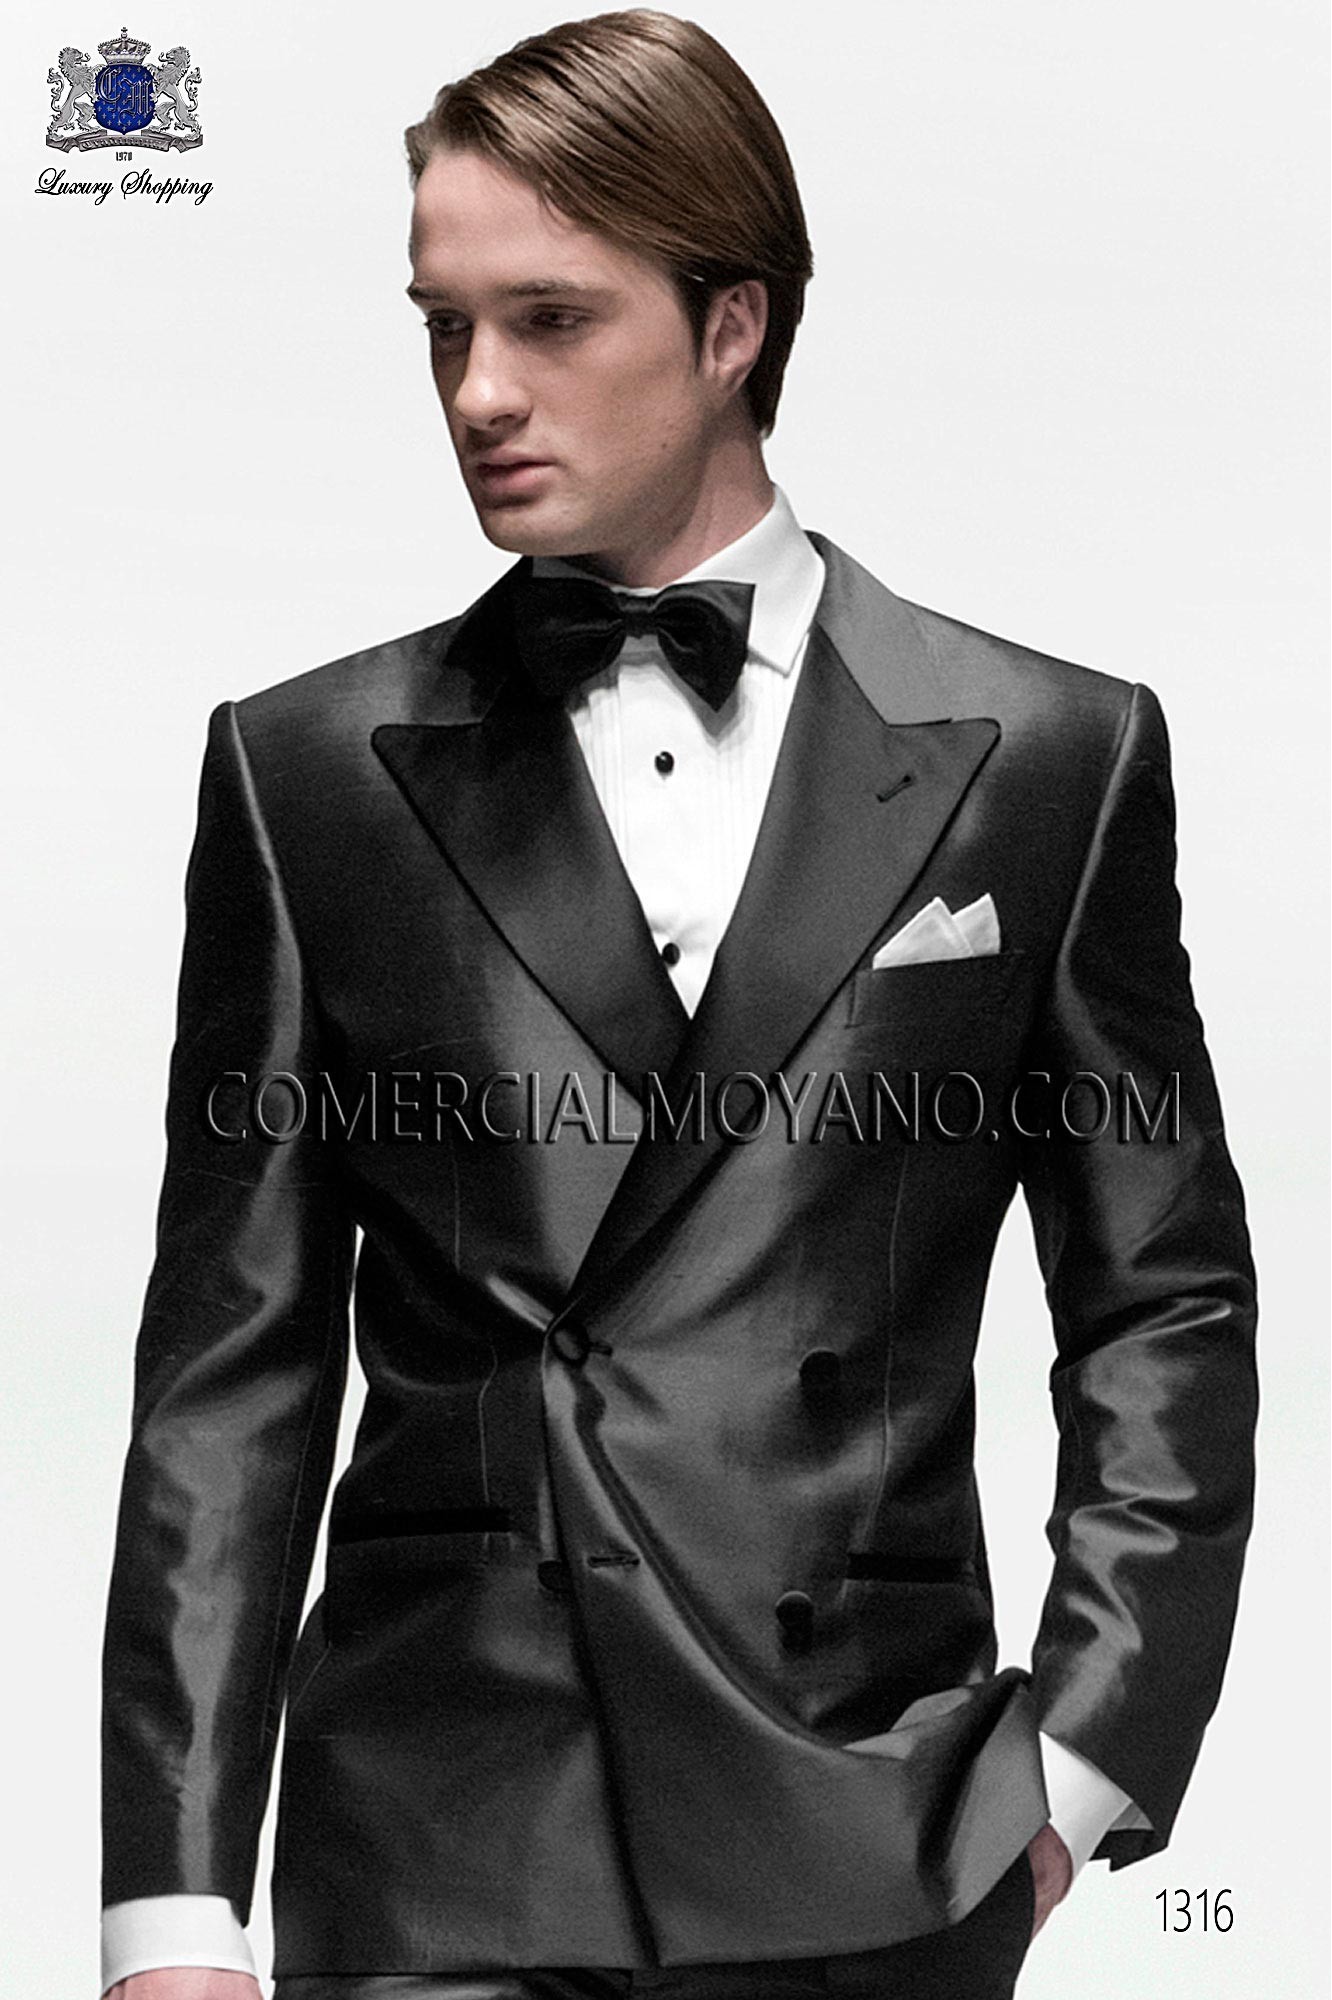 Black Tie Gray men wedding suit, model: 1316 Ottavio Nuccio Gala ...